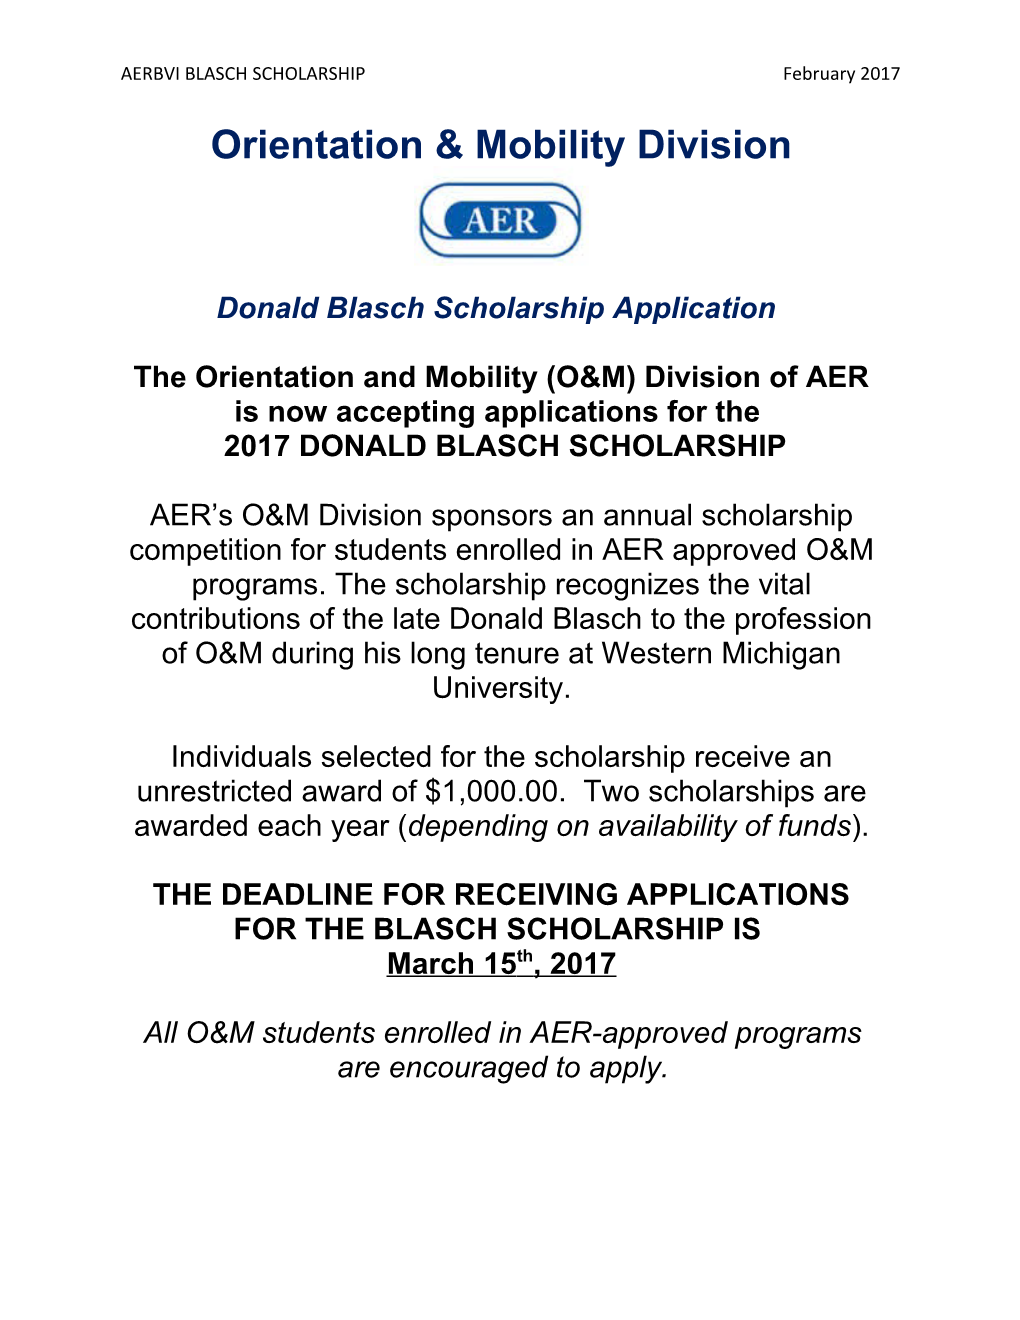 Donald Blasch Scholarship Application